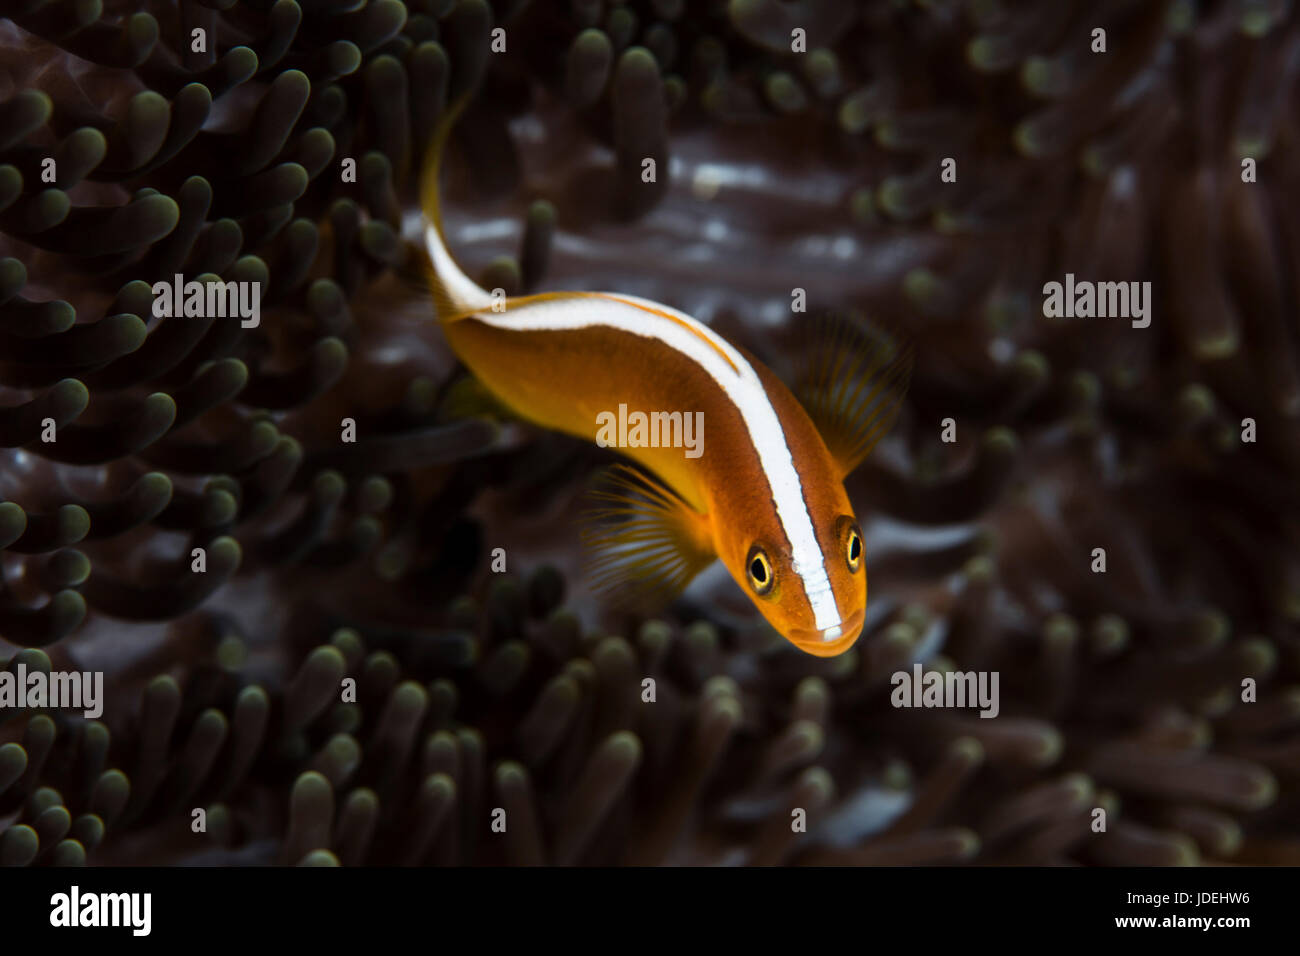 Skink Anemonefish, Amphiprion sandaracinos, Raja Ampat, West Papua, Indonesia Stock Photo